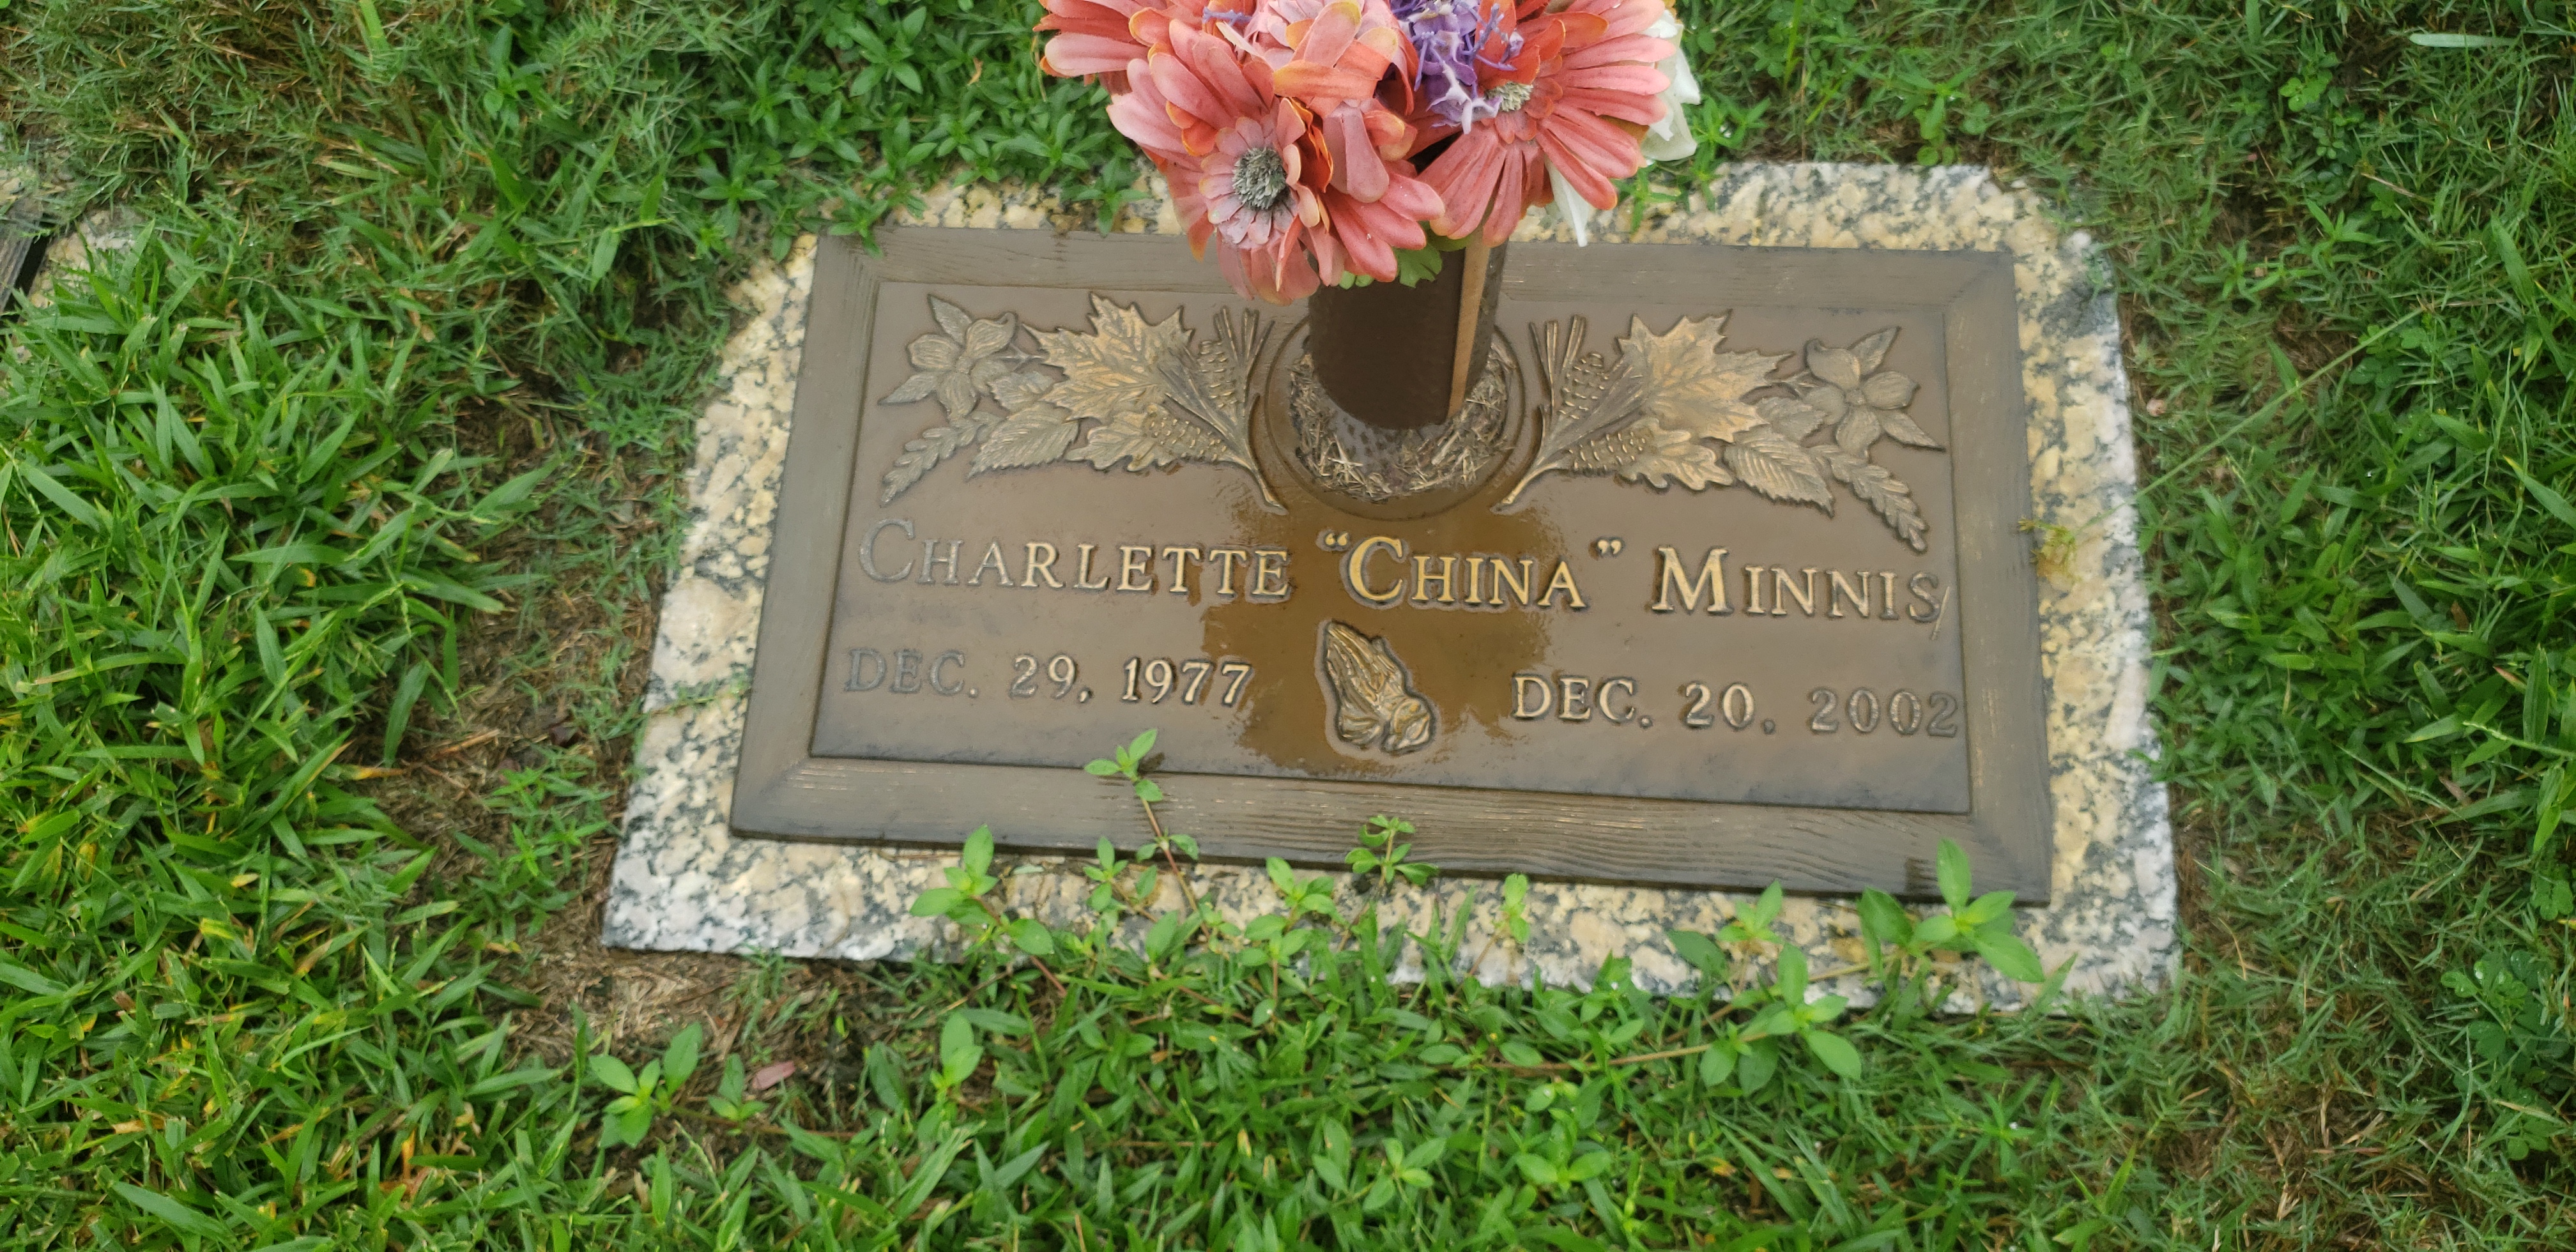 Charlette "China" Minnis